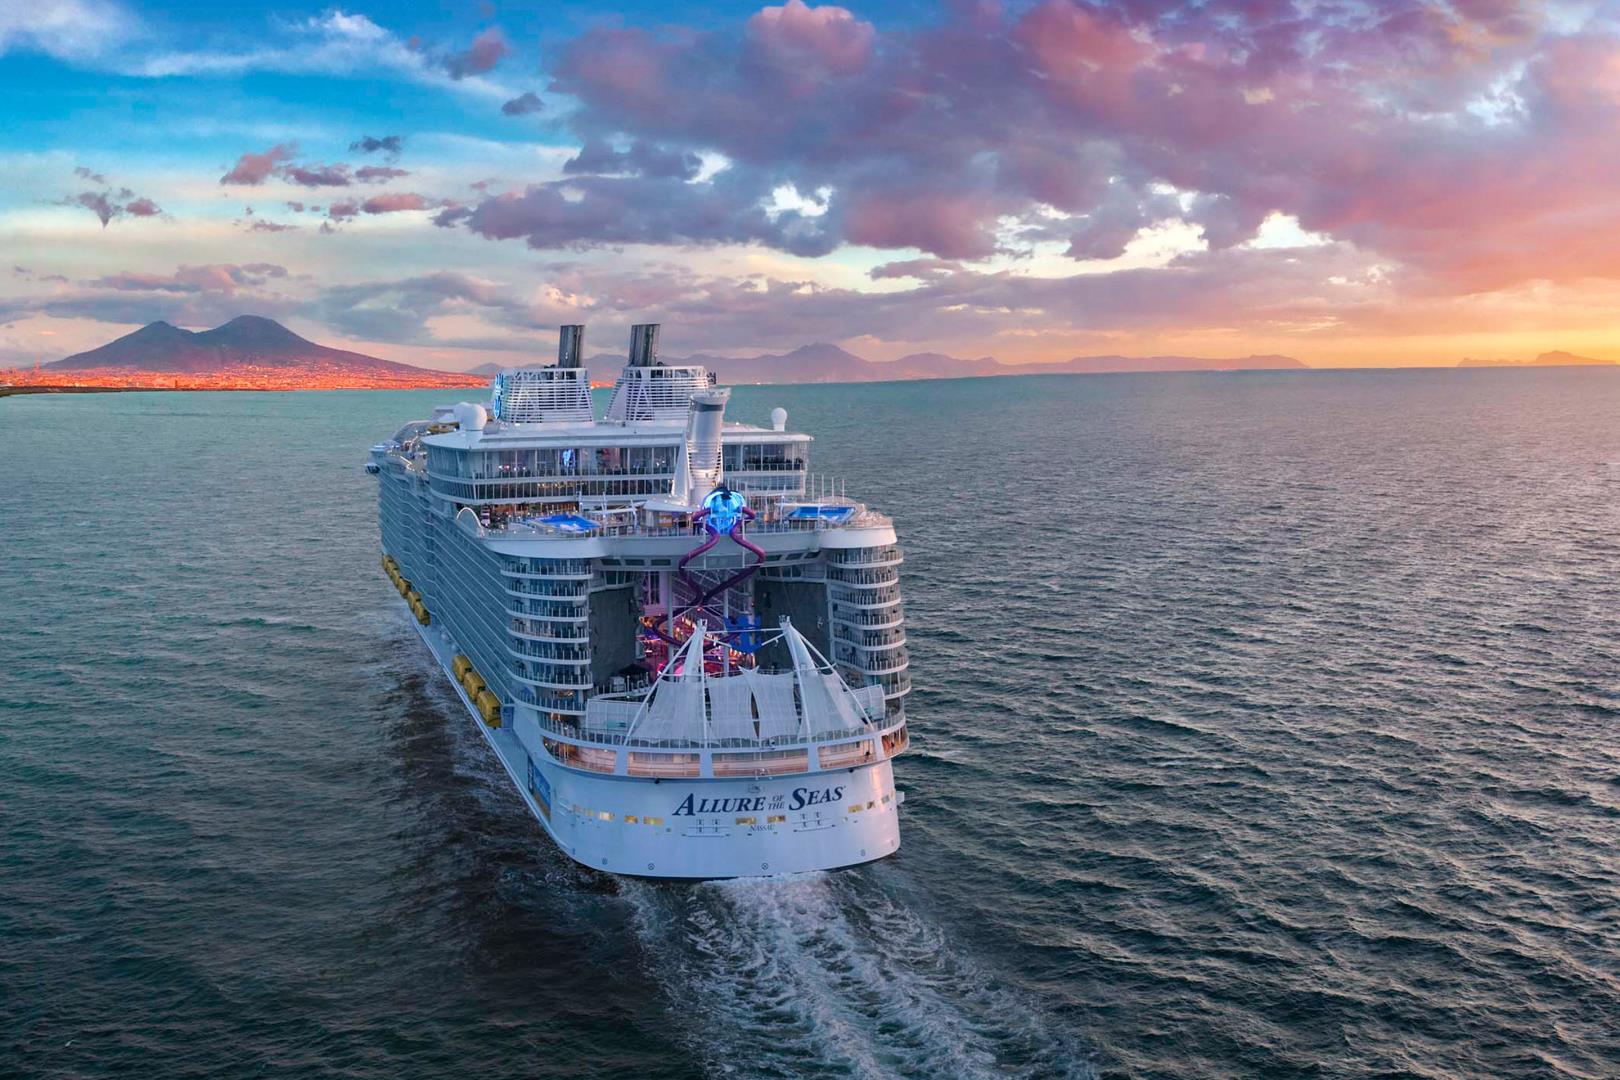 Western Caribbean Cruise